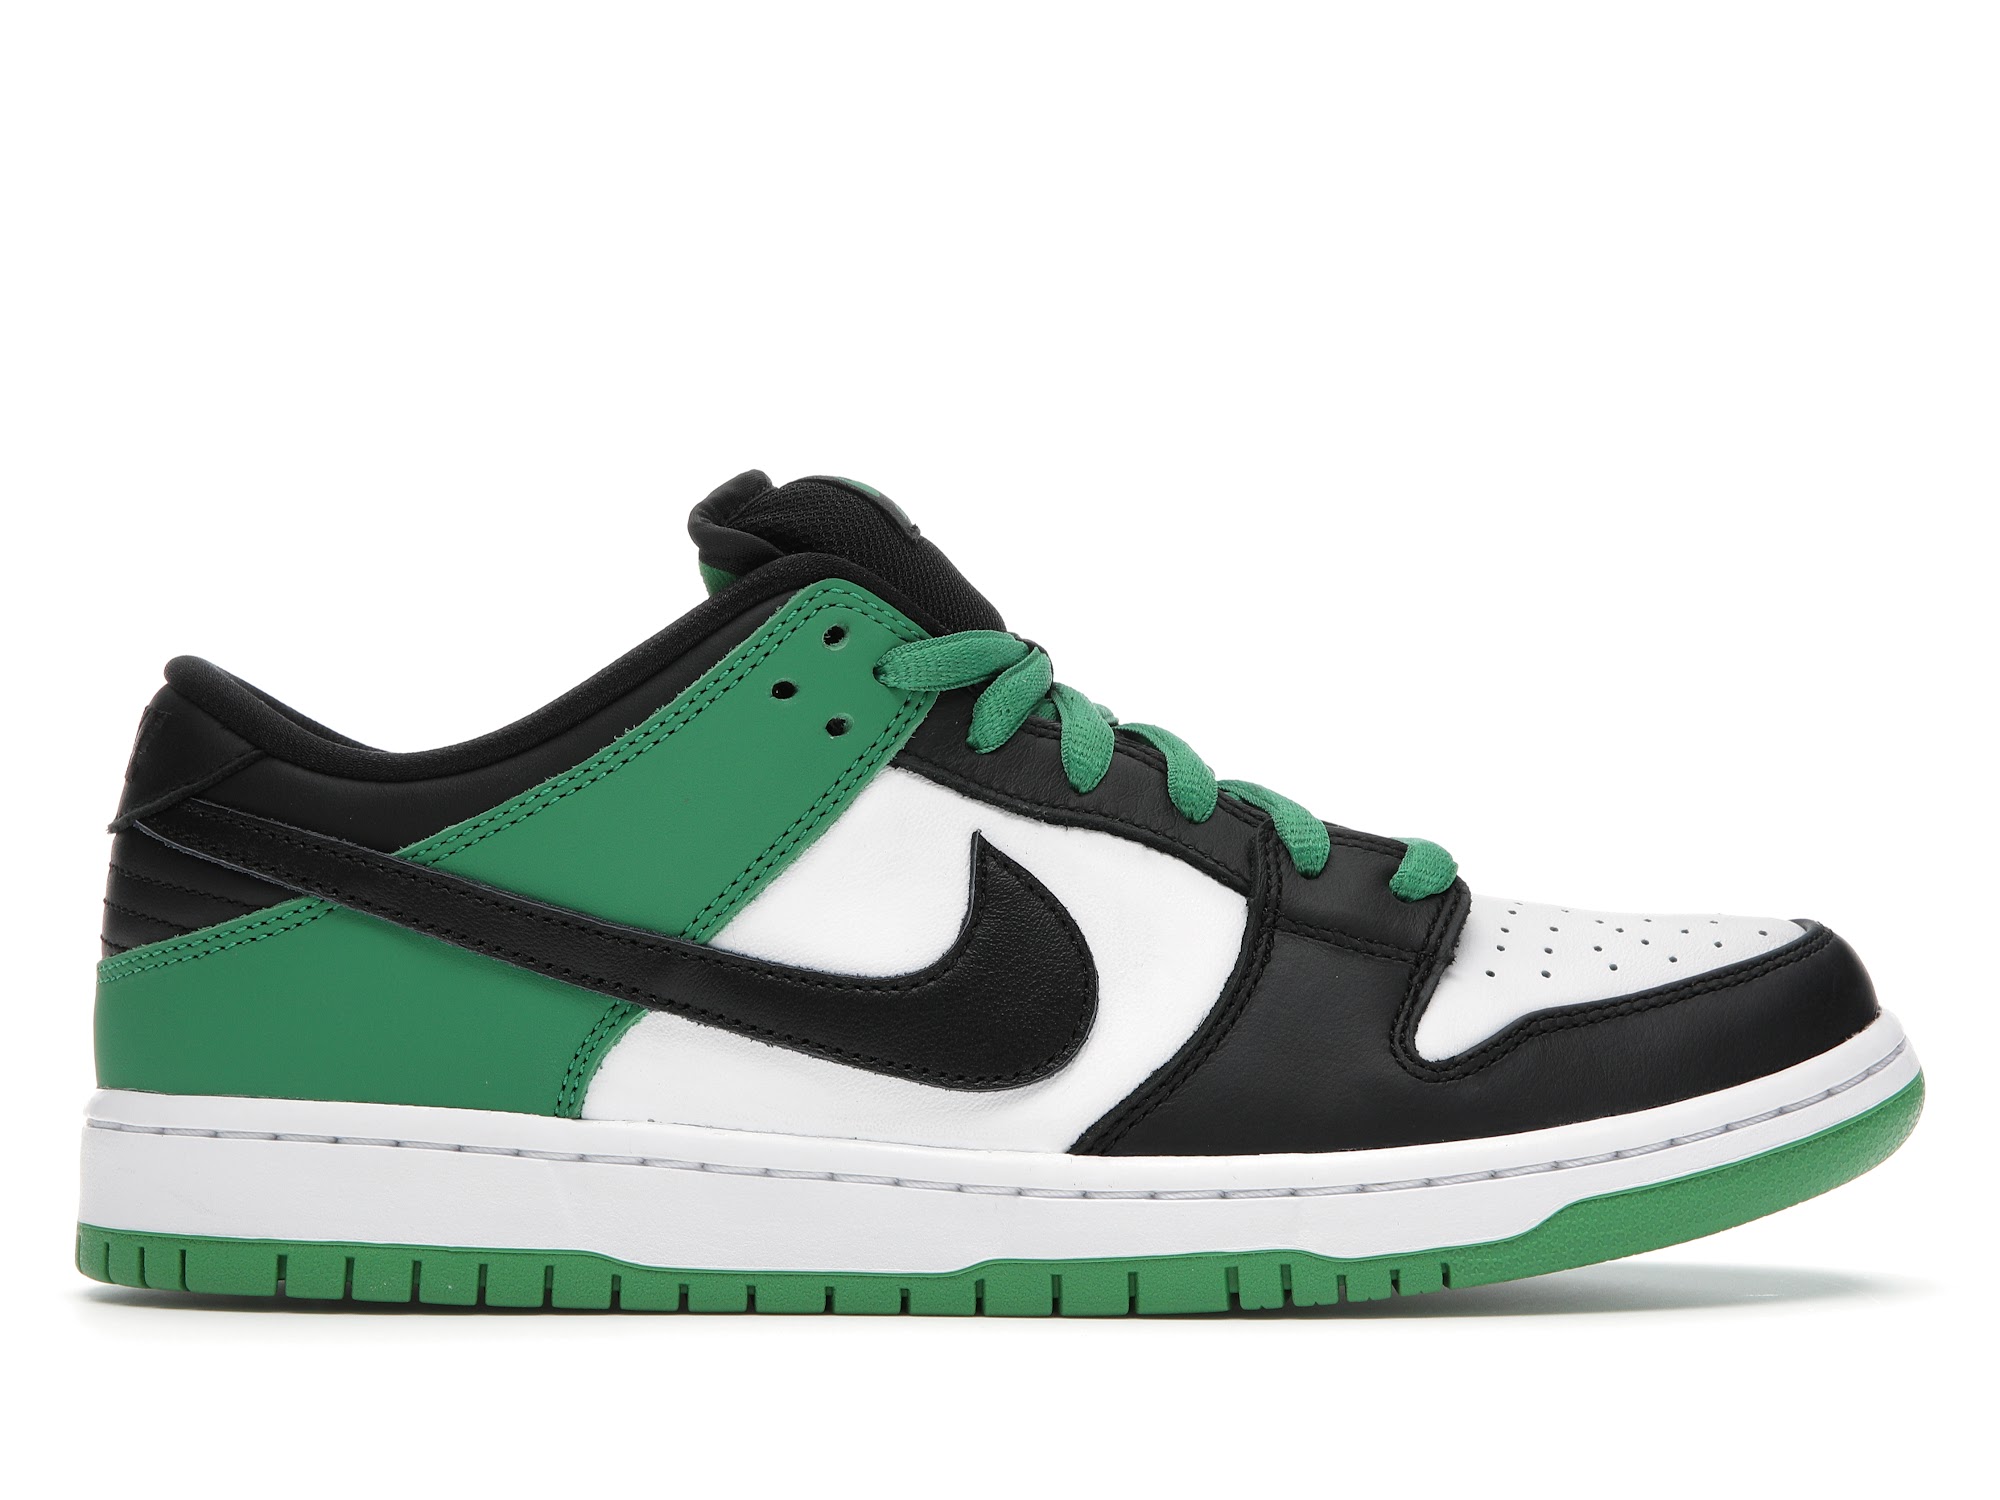 US9 Nike sb dank low classic Green18000円即決如何でしょうか